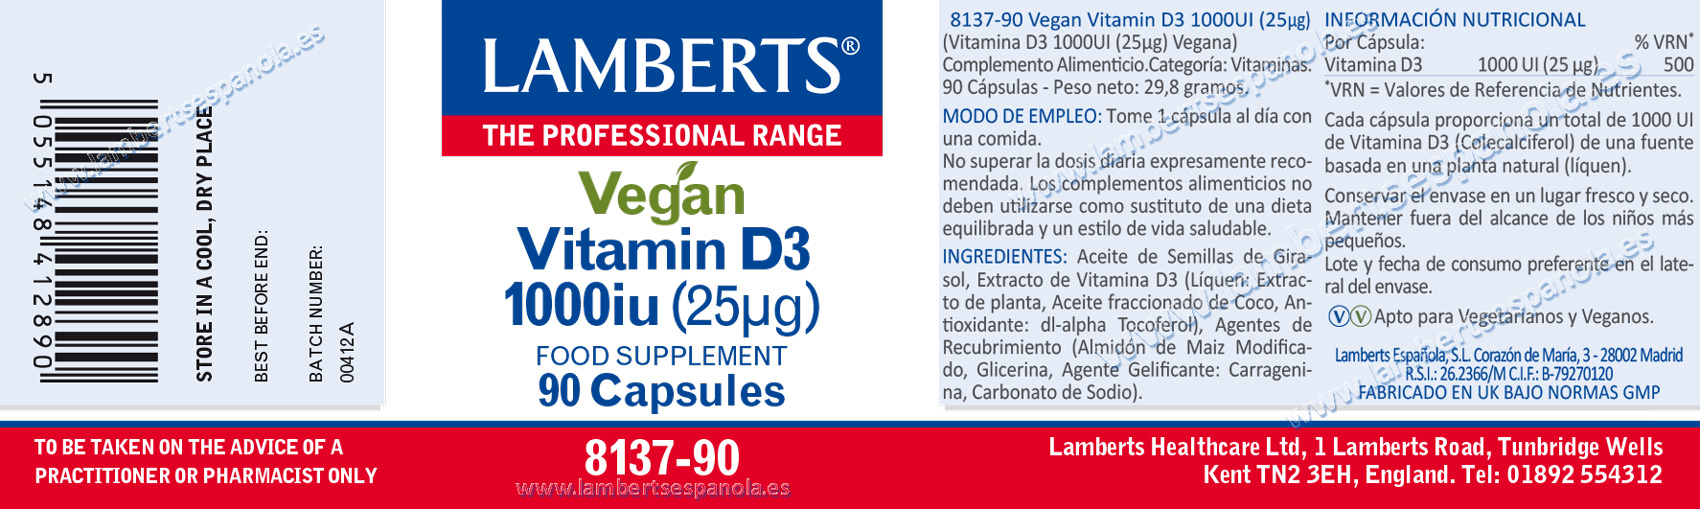 Vitamina D3 1000 vegana